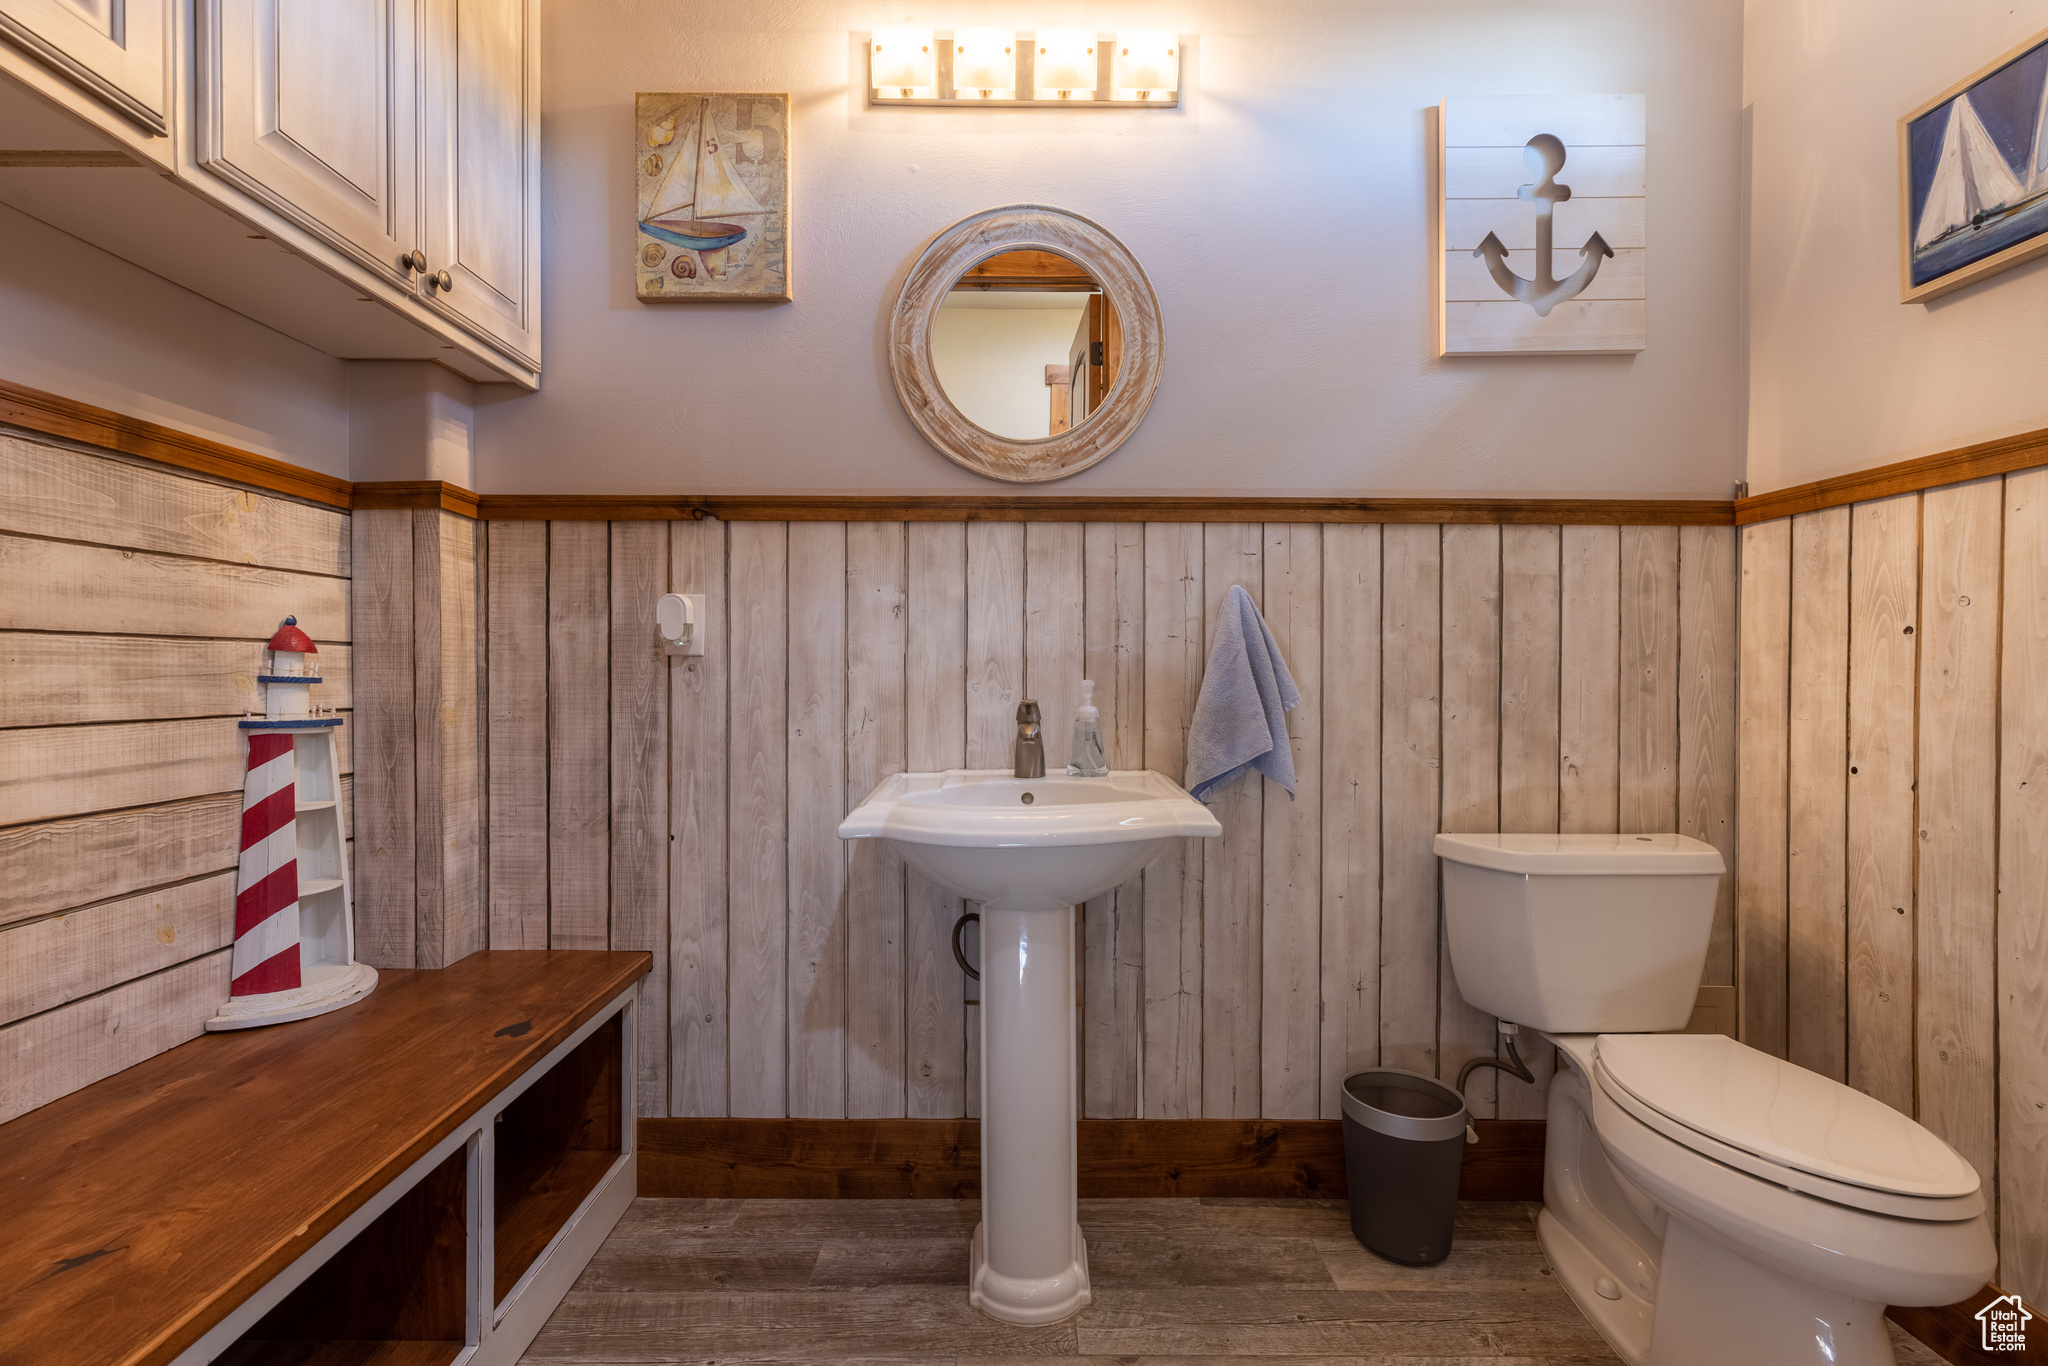 Powder room Bathroom with hardwood / wood-style flooring, toilet, & custom wooden wall treatments